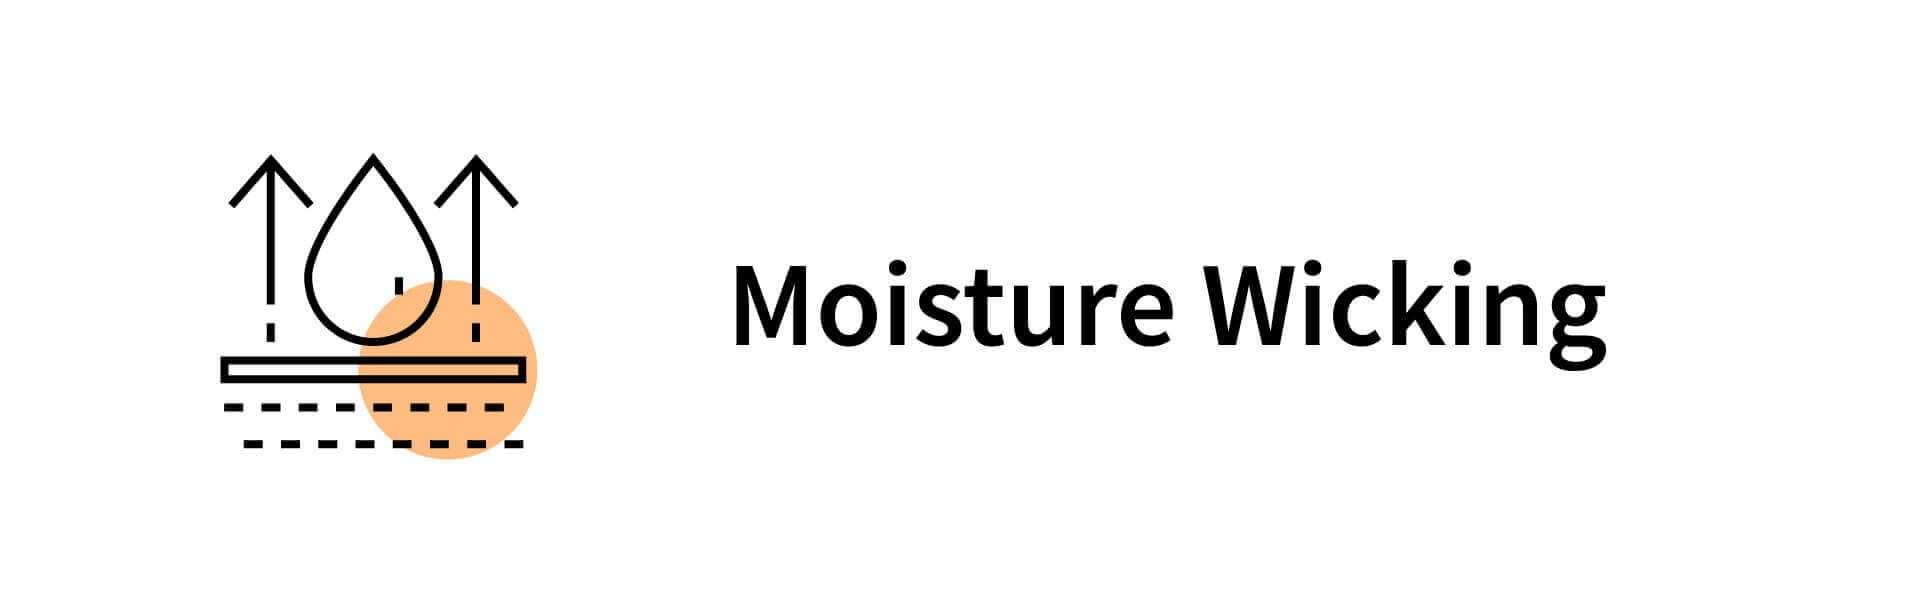 moisture-wicking